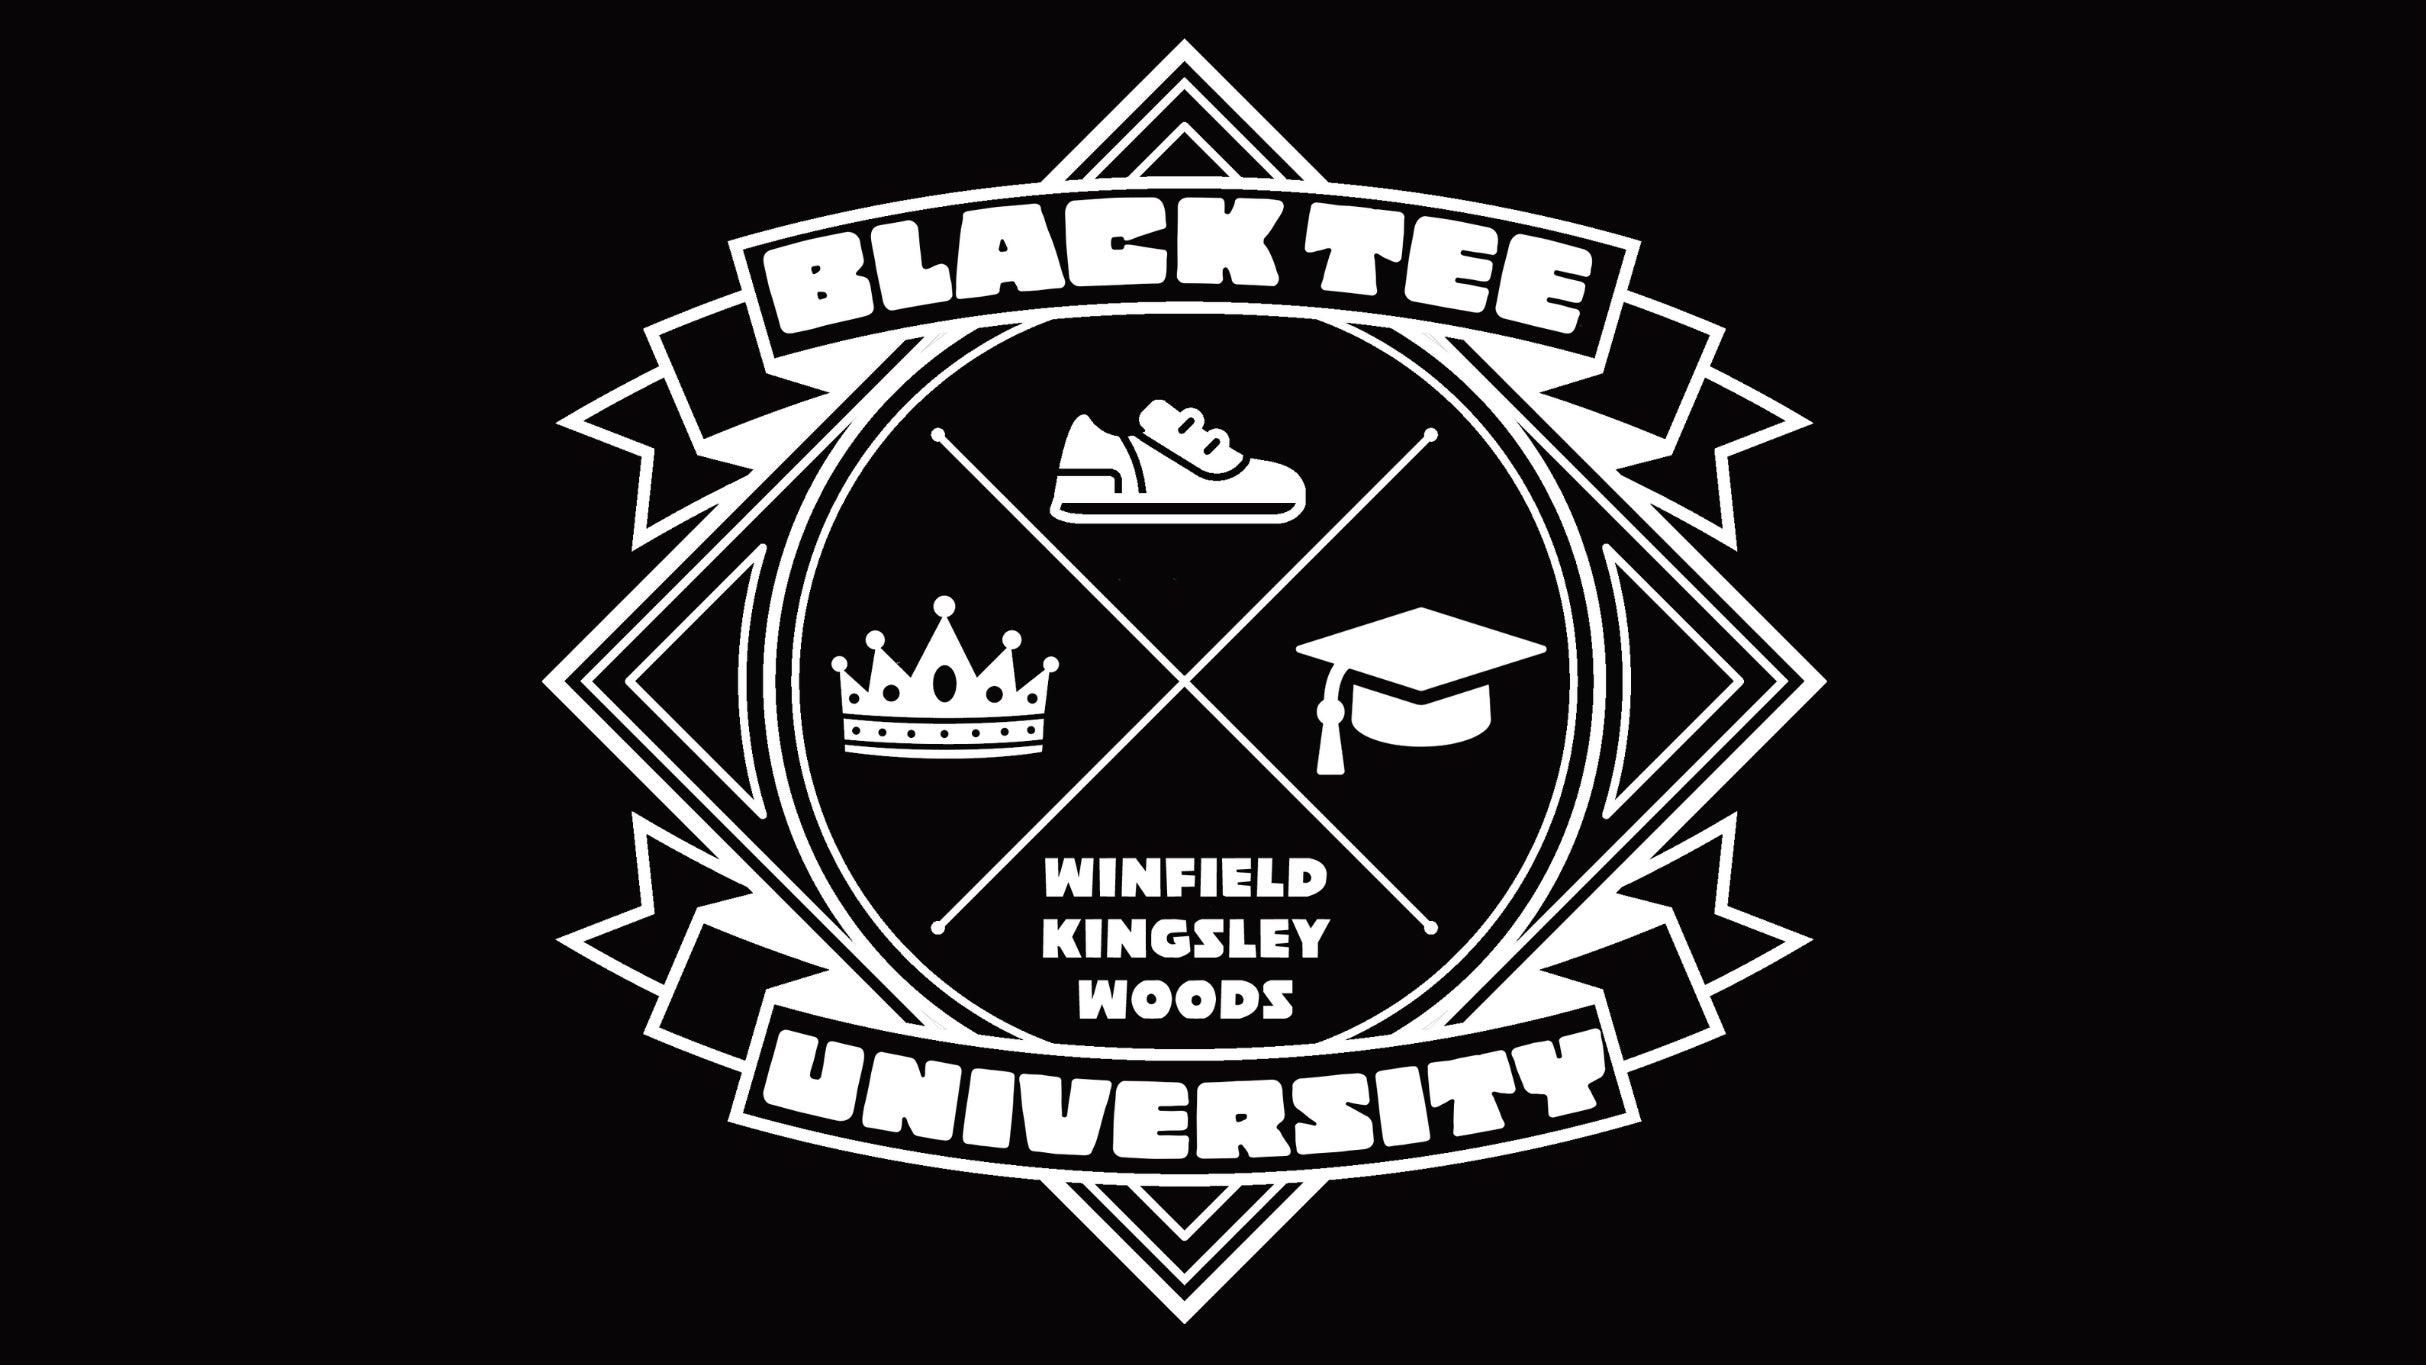 Black Tee University presale information on freepresalepasswords.com